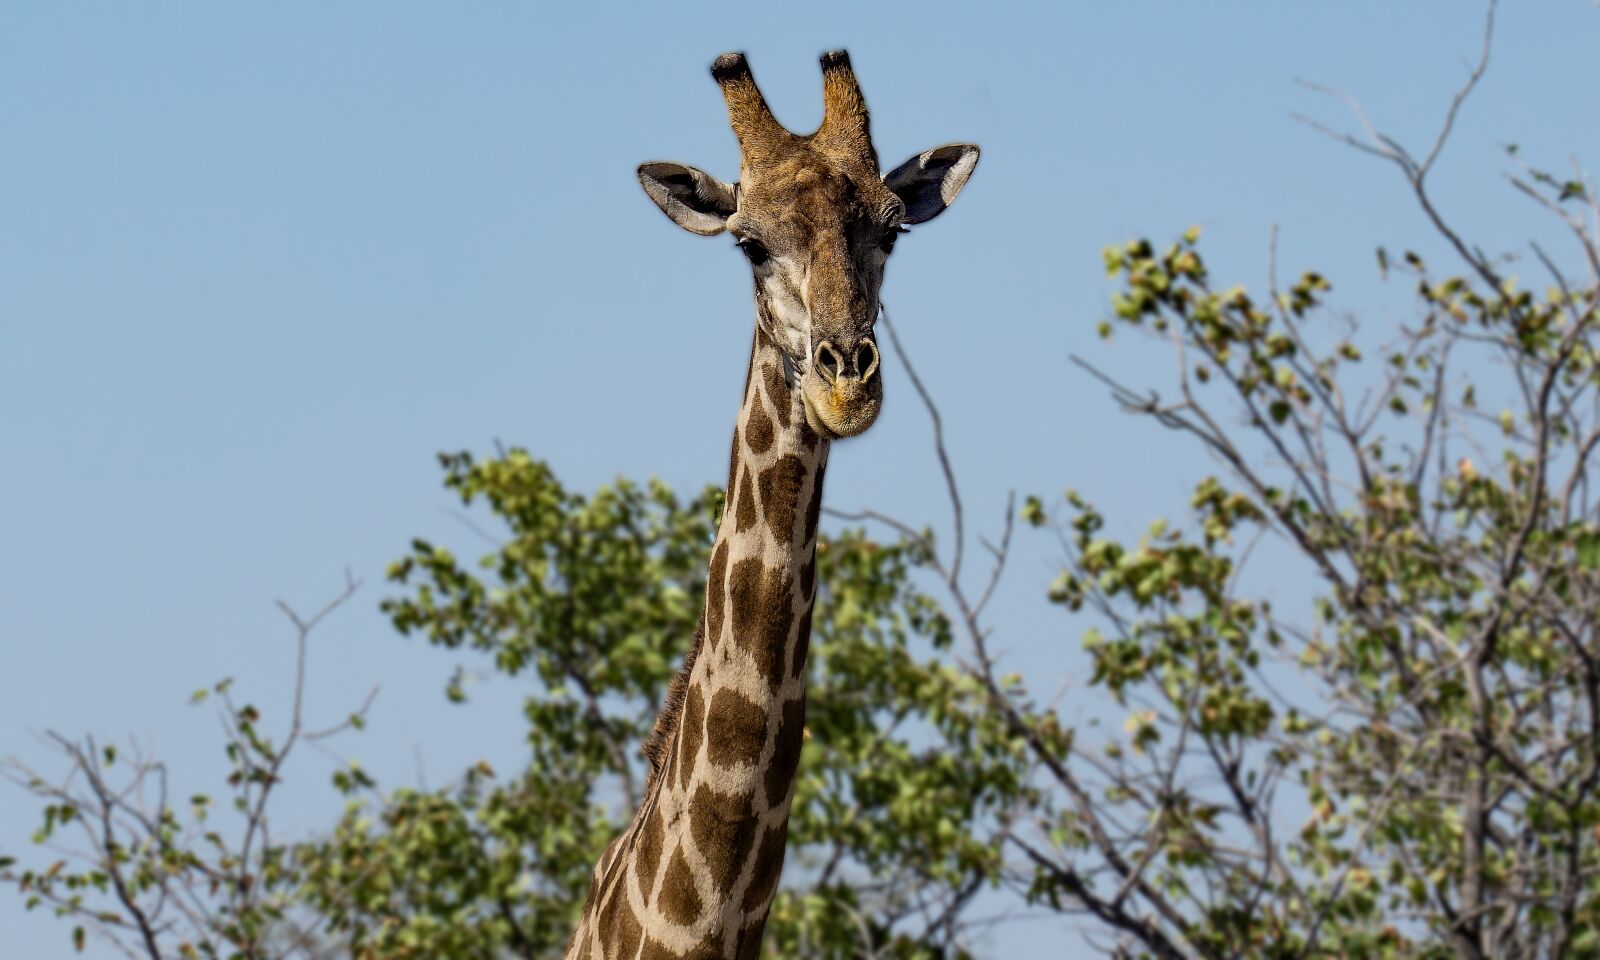 Sony a6000 sample photo. Simbabwe, giraffe, wildlife photography